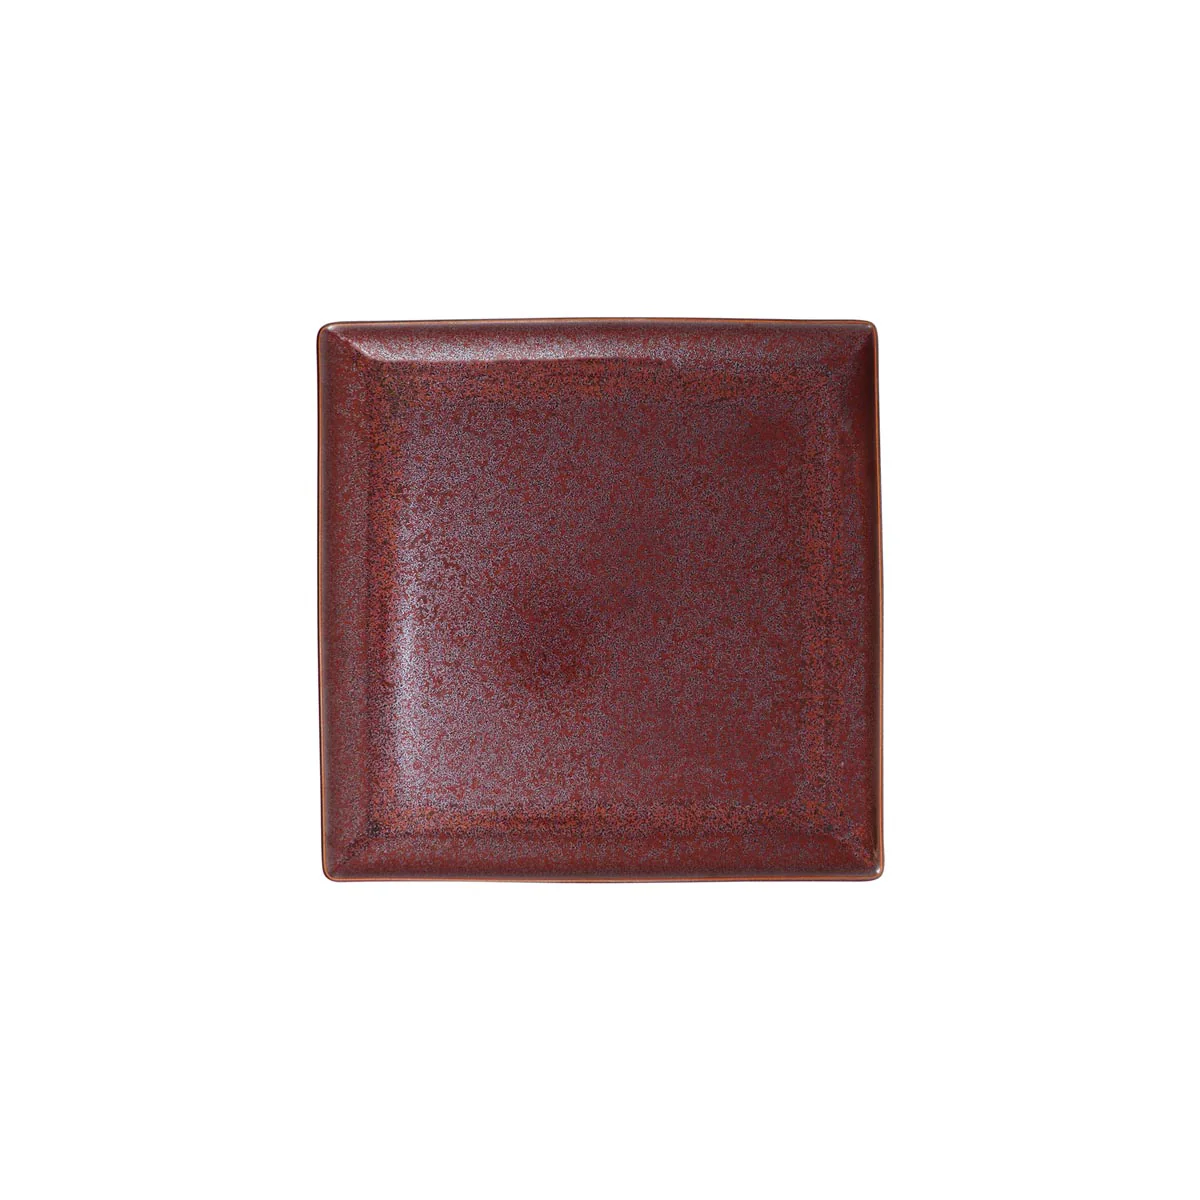 RED GRANITE- Square plate 21 cm                                